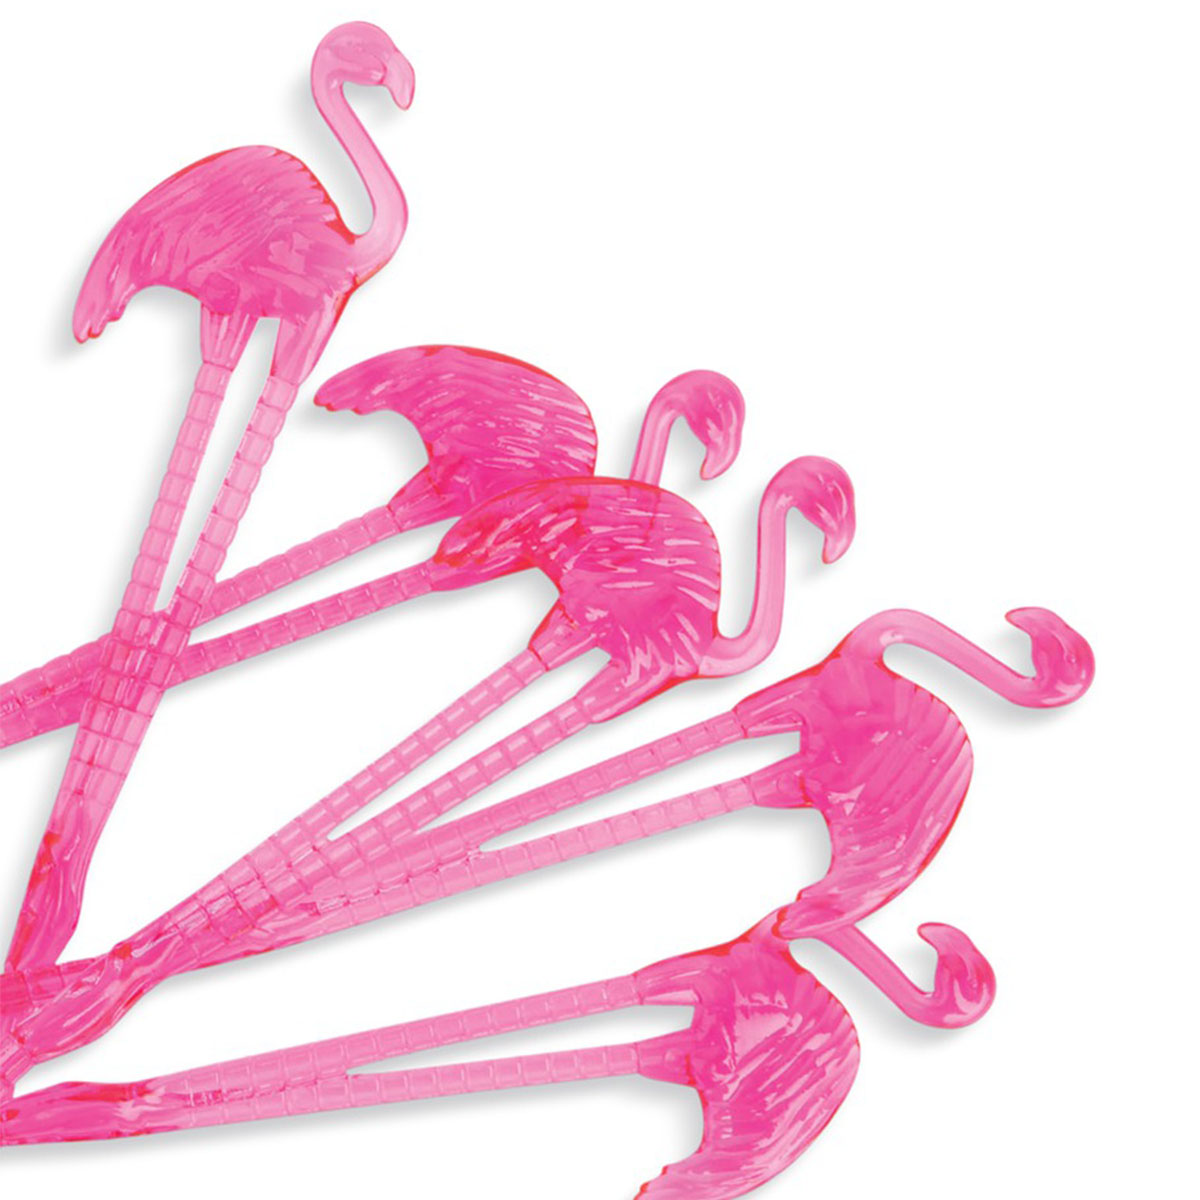 Flamingo Cocktail Stirrers